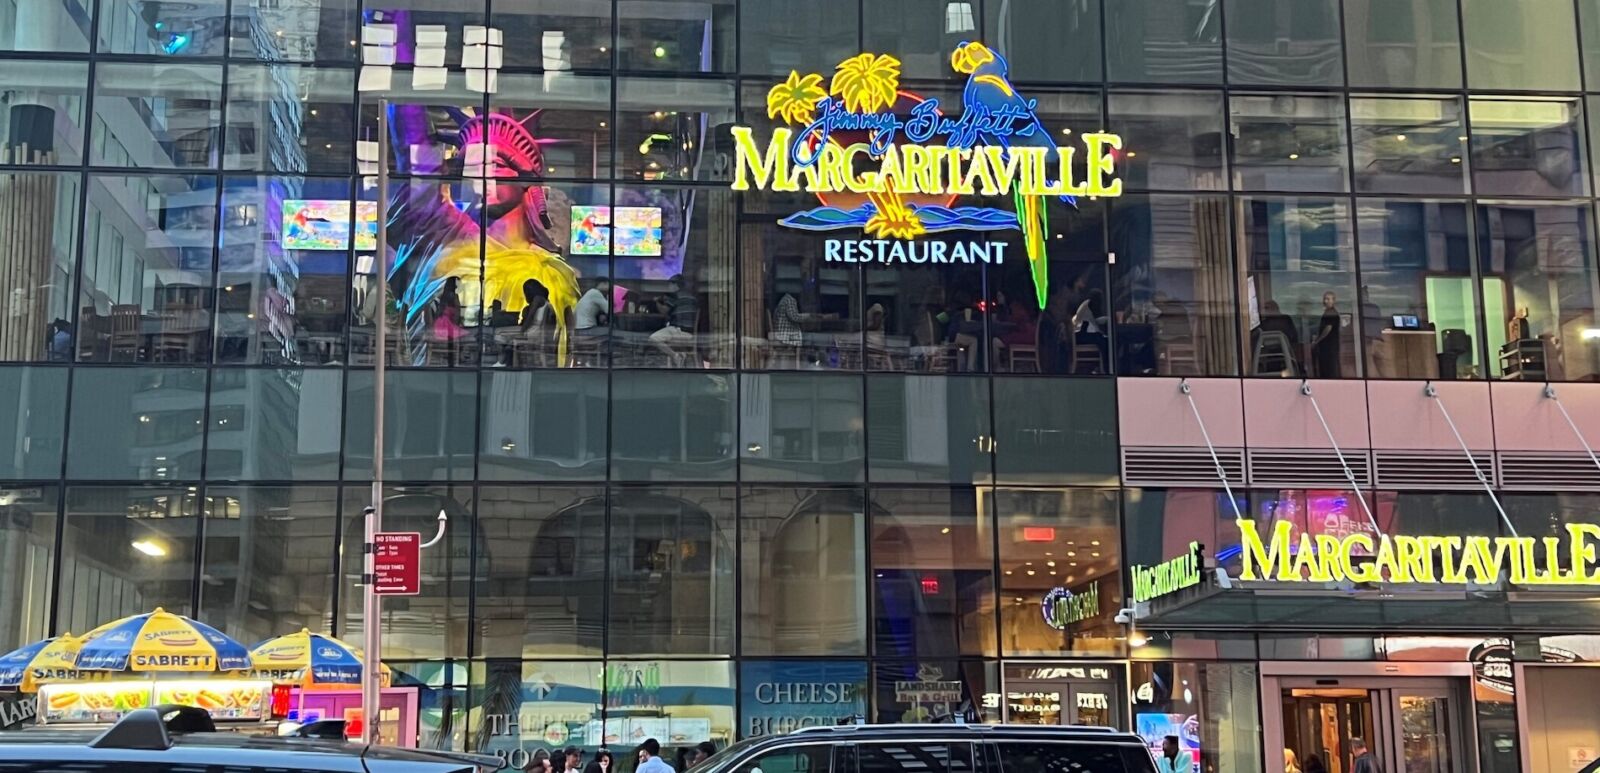 Margaritaville Times Square: a Campy Oasis for Millennials, Gen Z ...